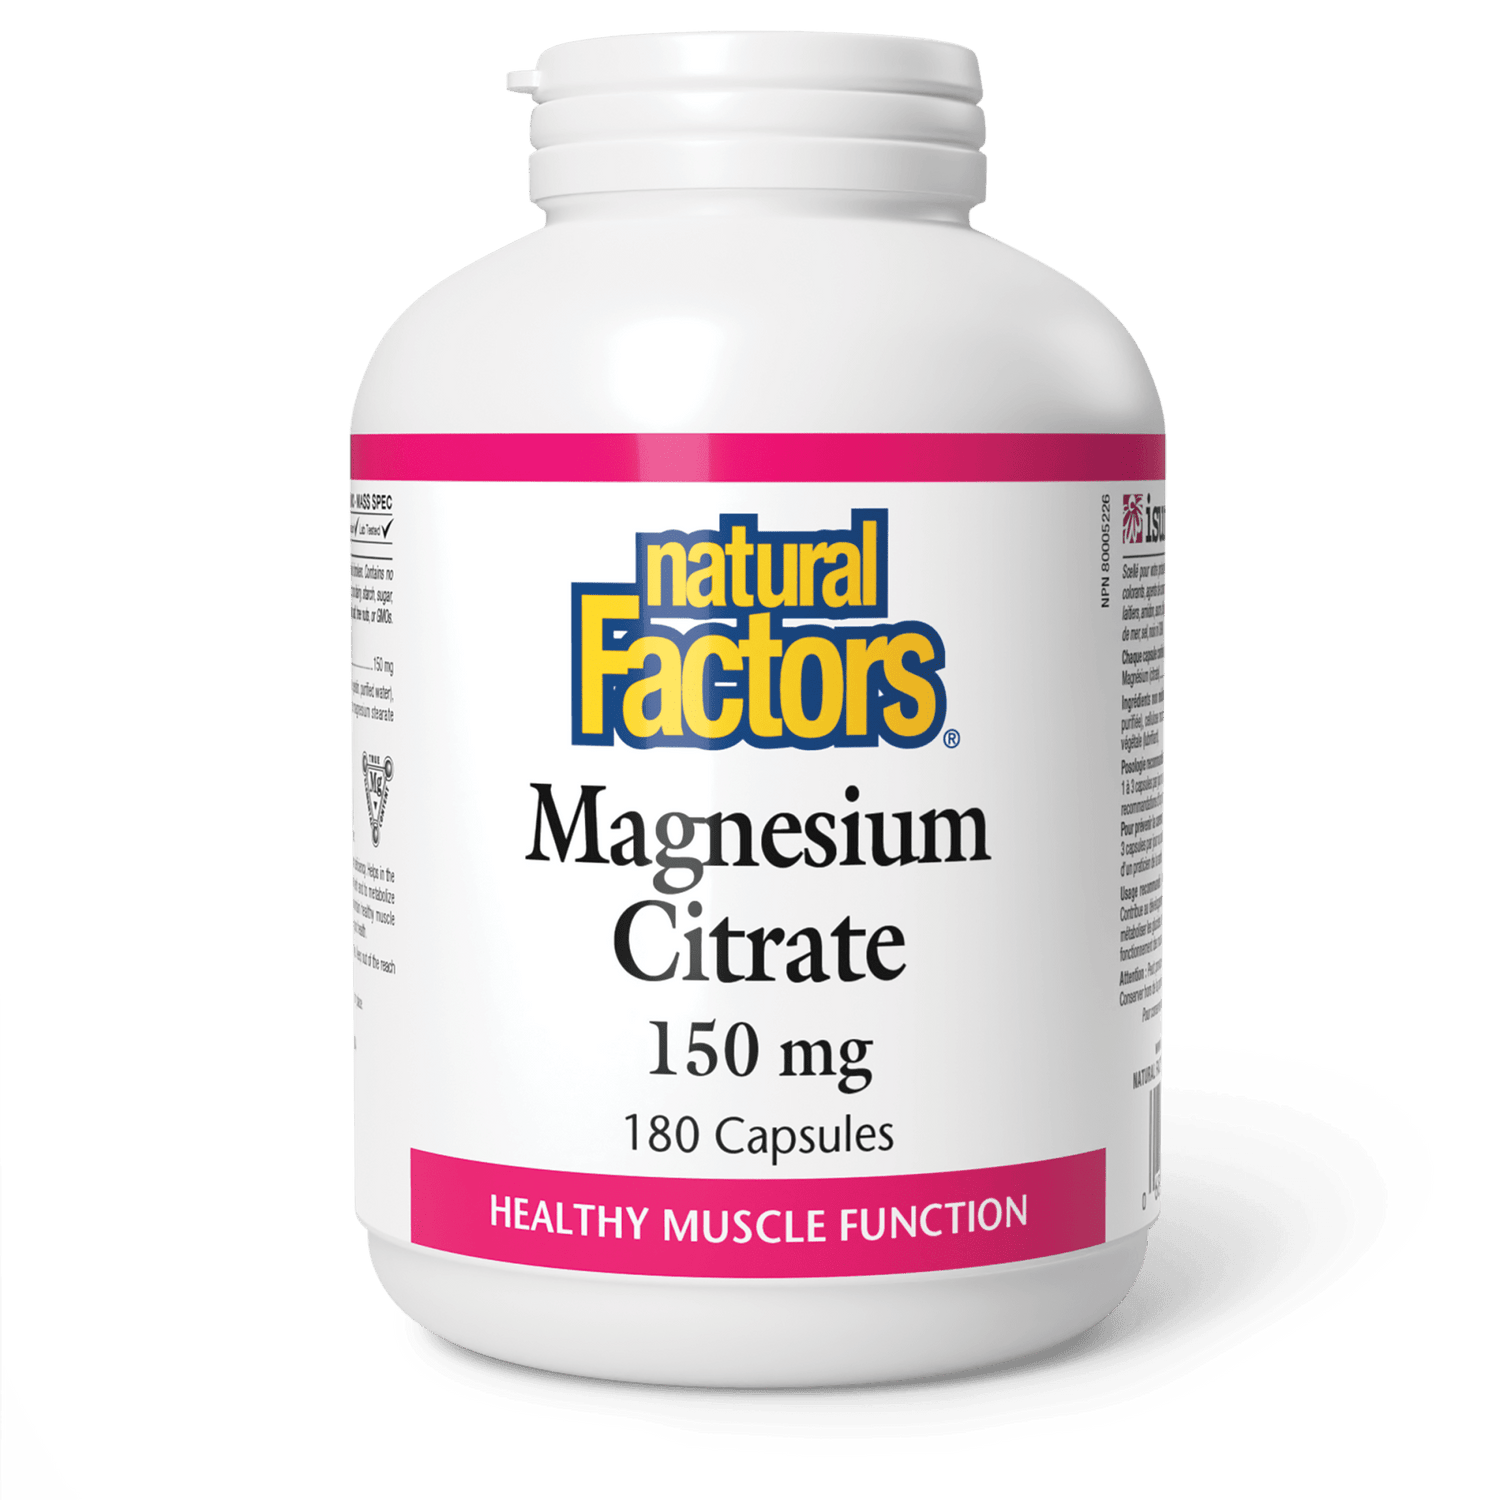 Magnesium Citrate 150 mg, Natural Factors|v|image|1653